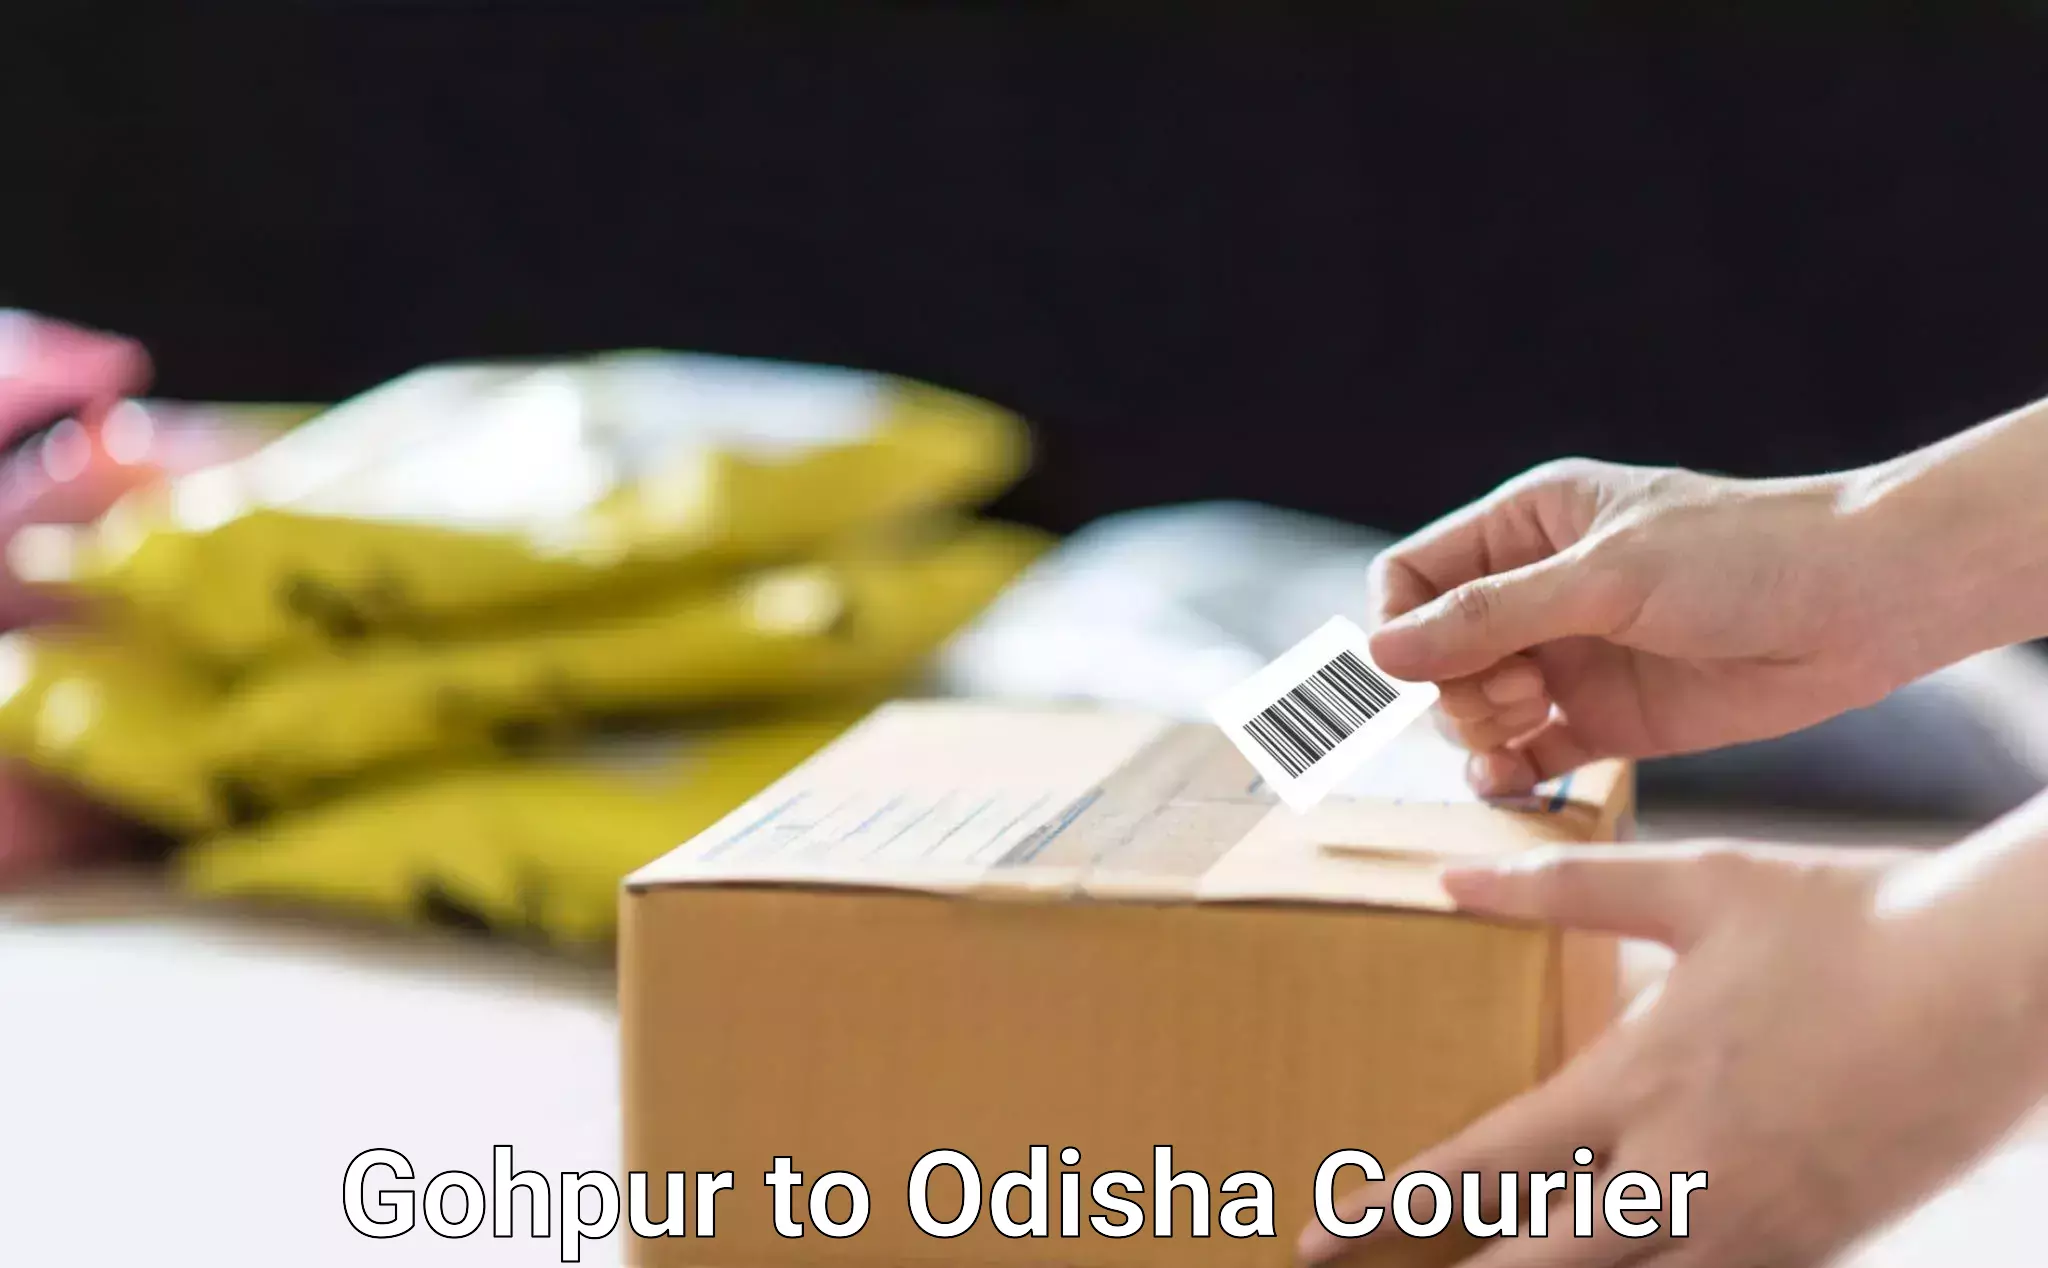 Multi-service courier options Gohpur to Daspalla